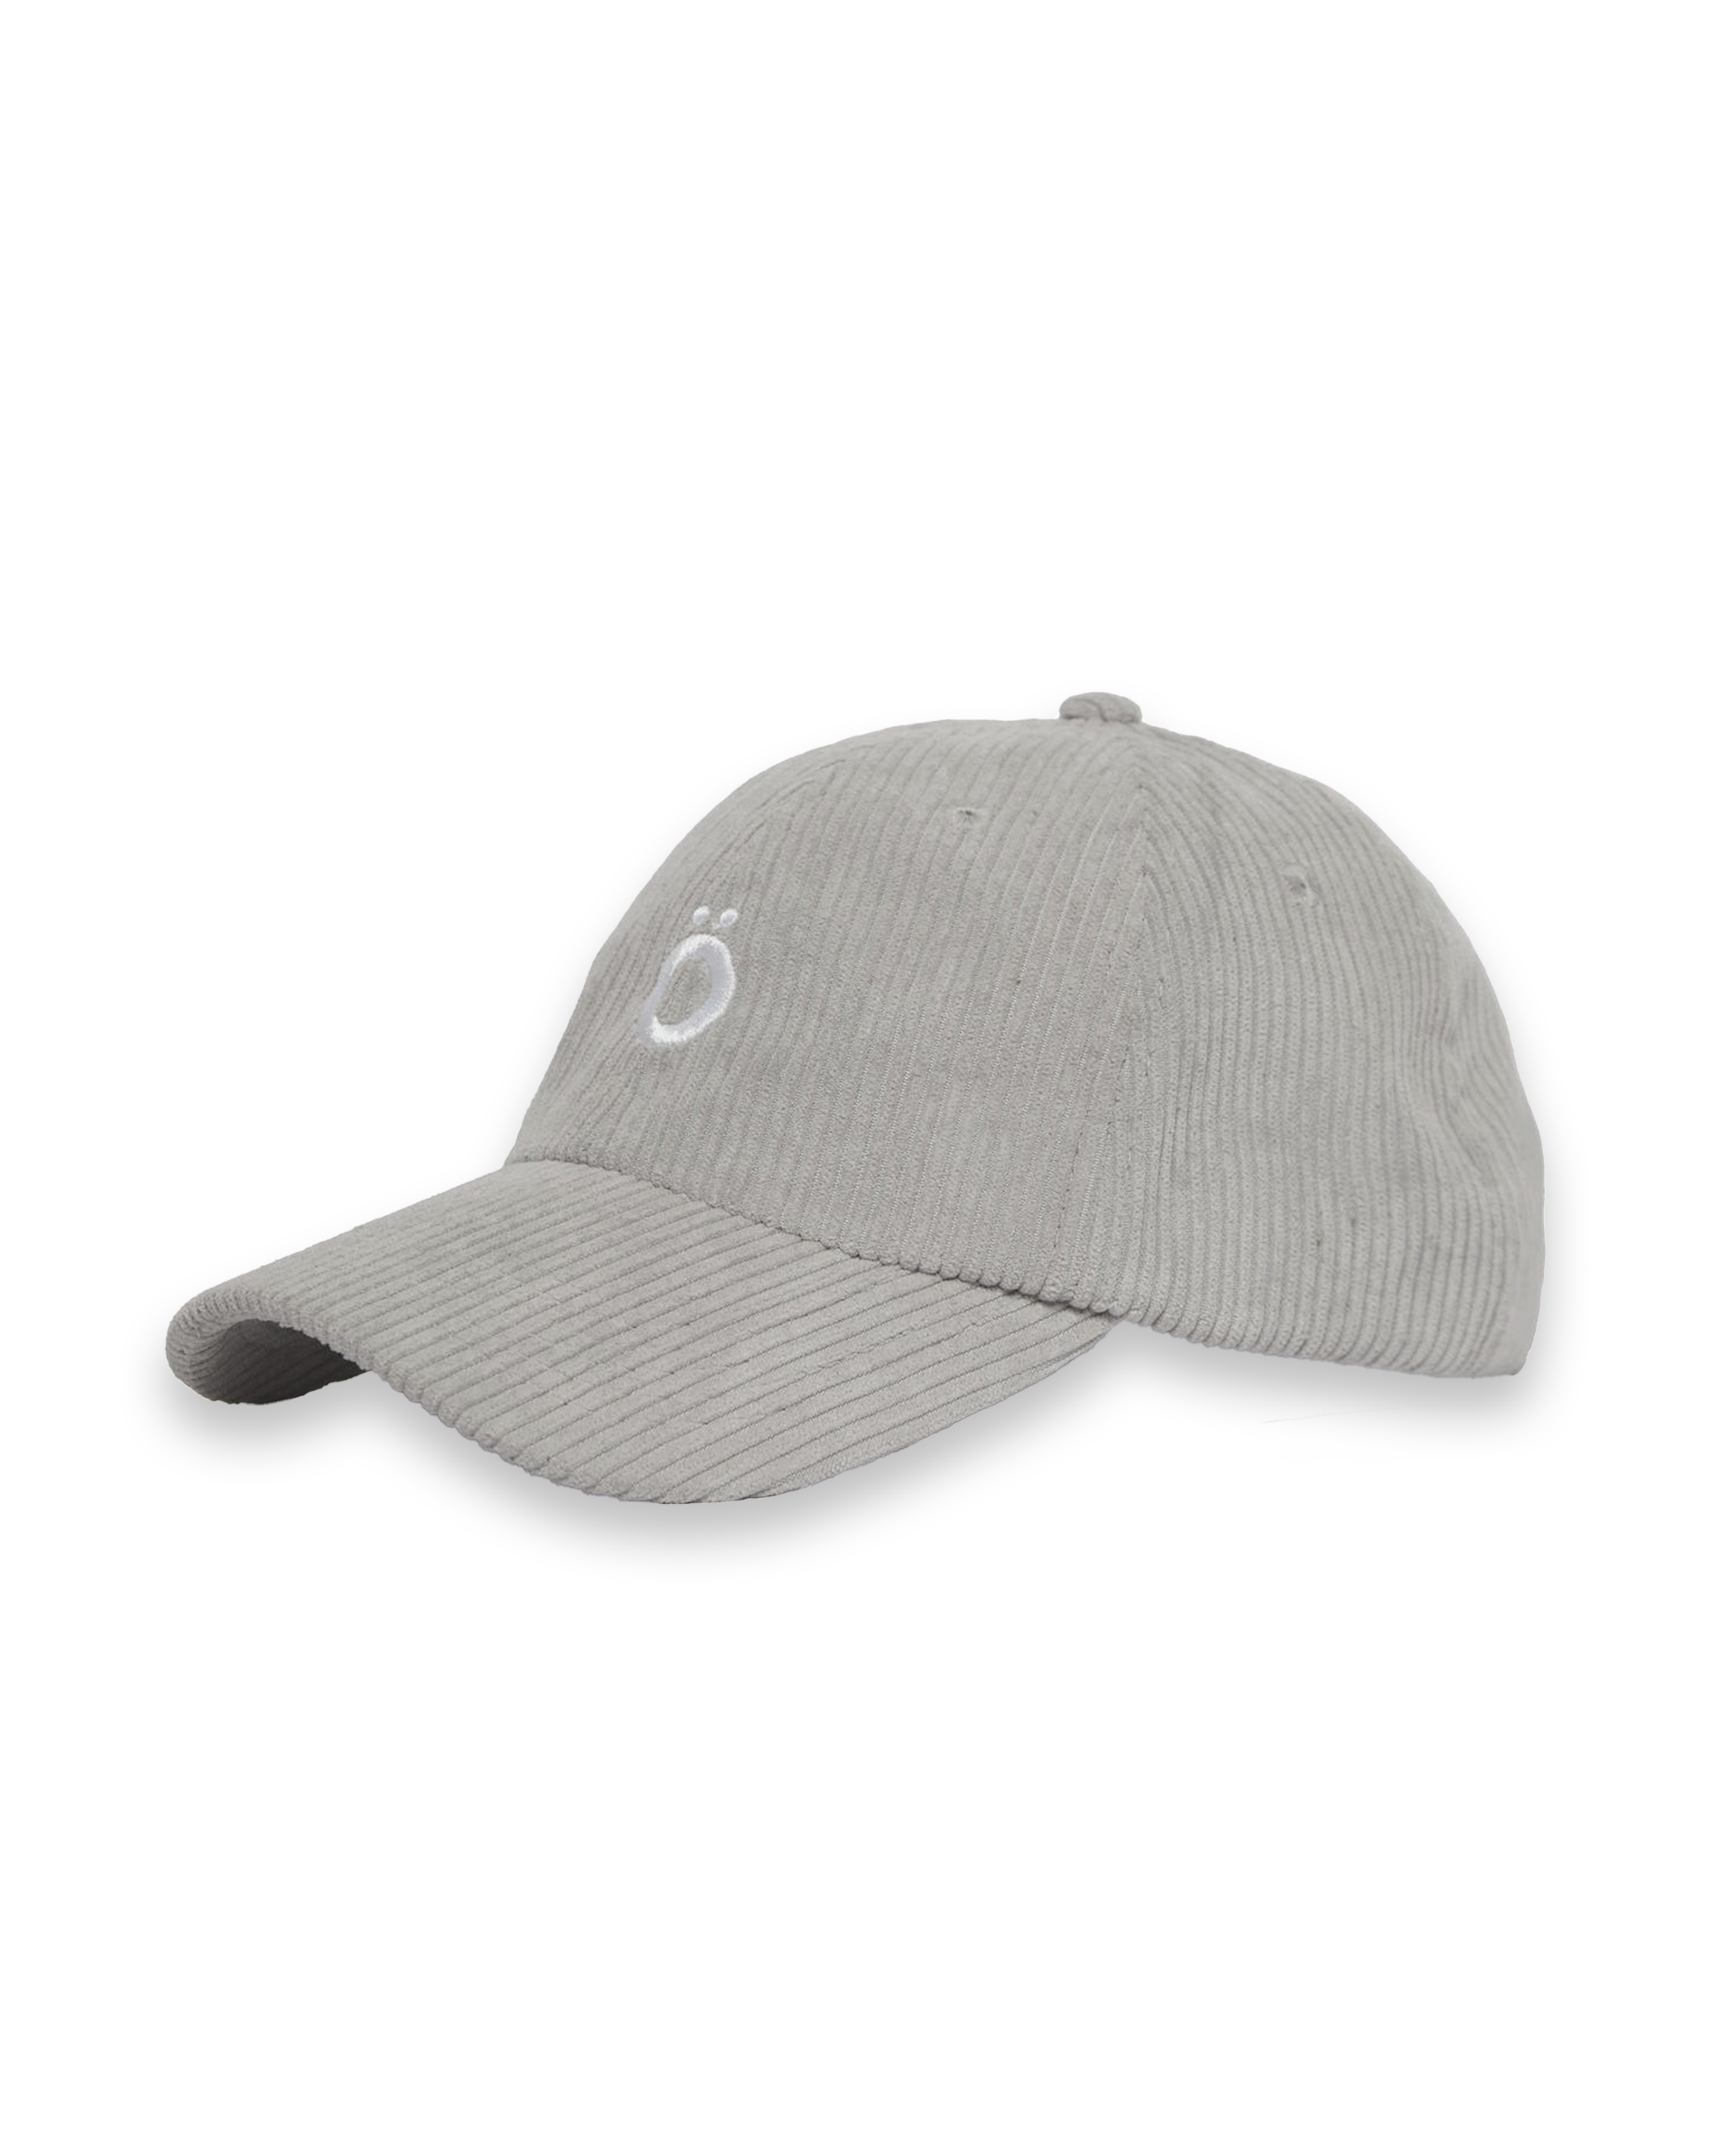 Grey corduroy cap